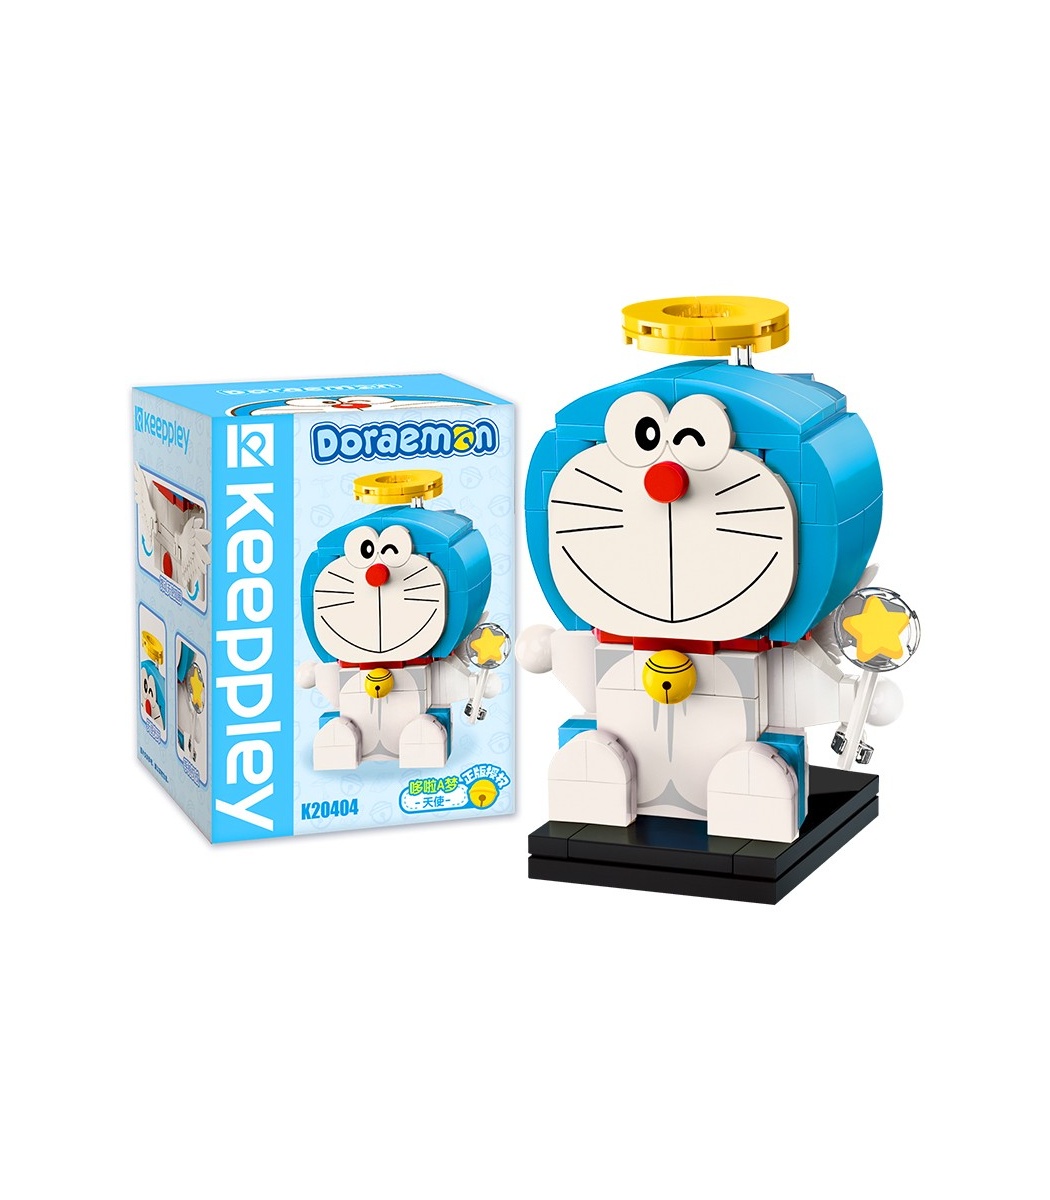 Keeppley K20404 Doraemon Angel Building Block Toy Set 